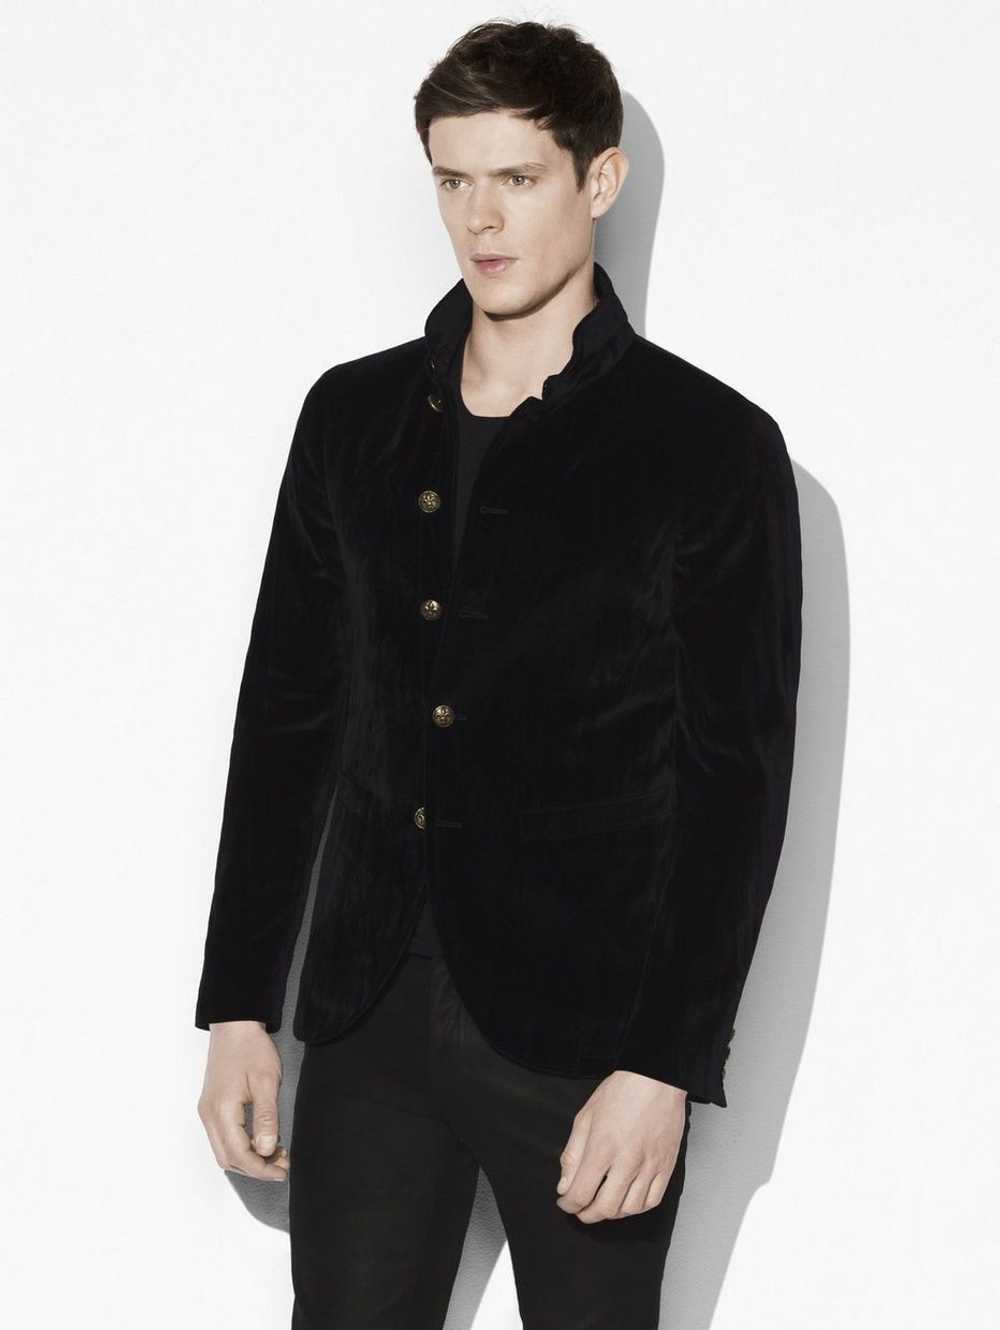 John Varvatos Crushed velvet jacket. Black. 50 - image 12